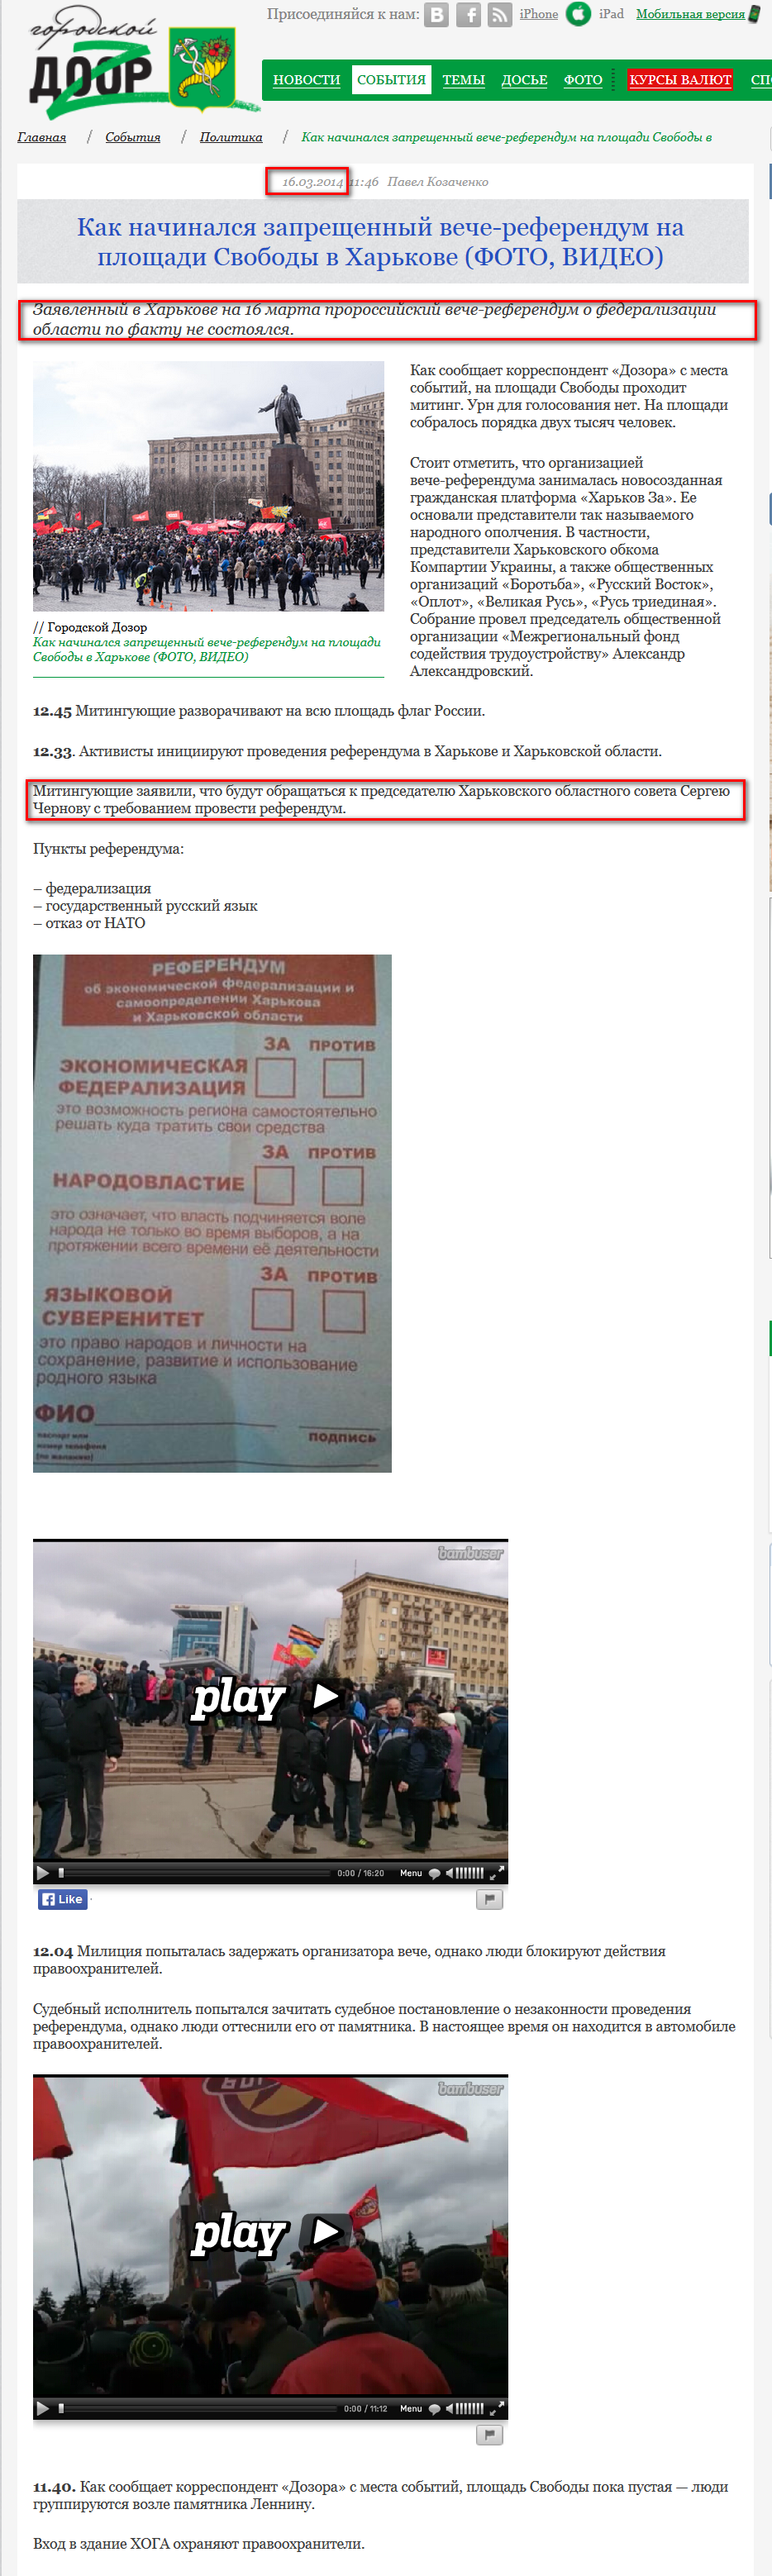 http://dozor.kharkov.ua/events/politics/1148743.html